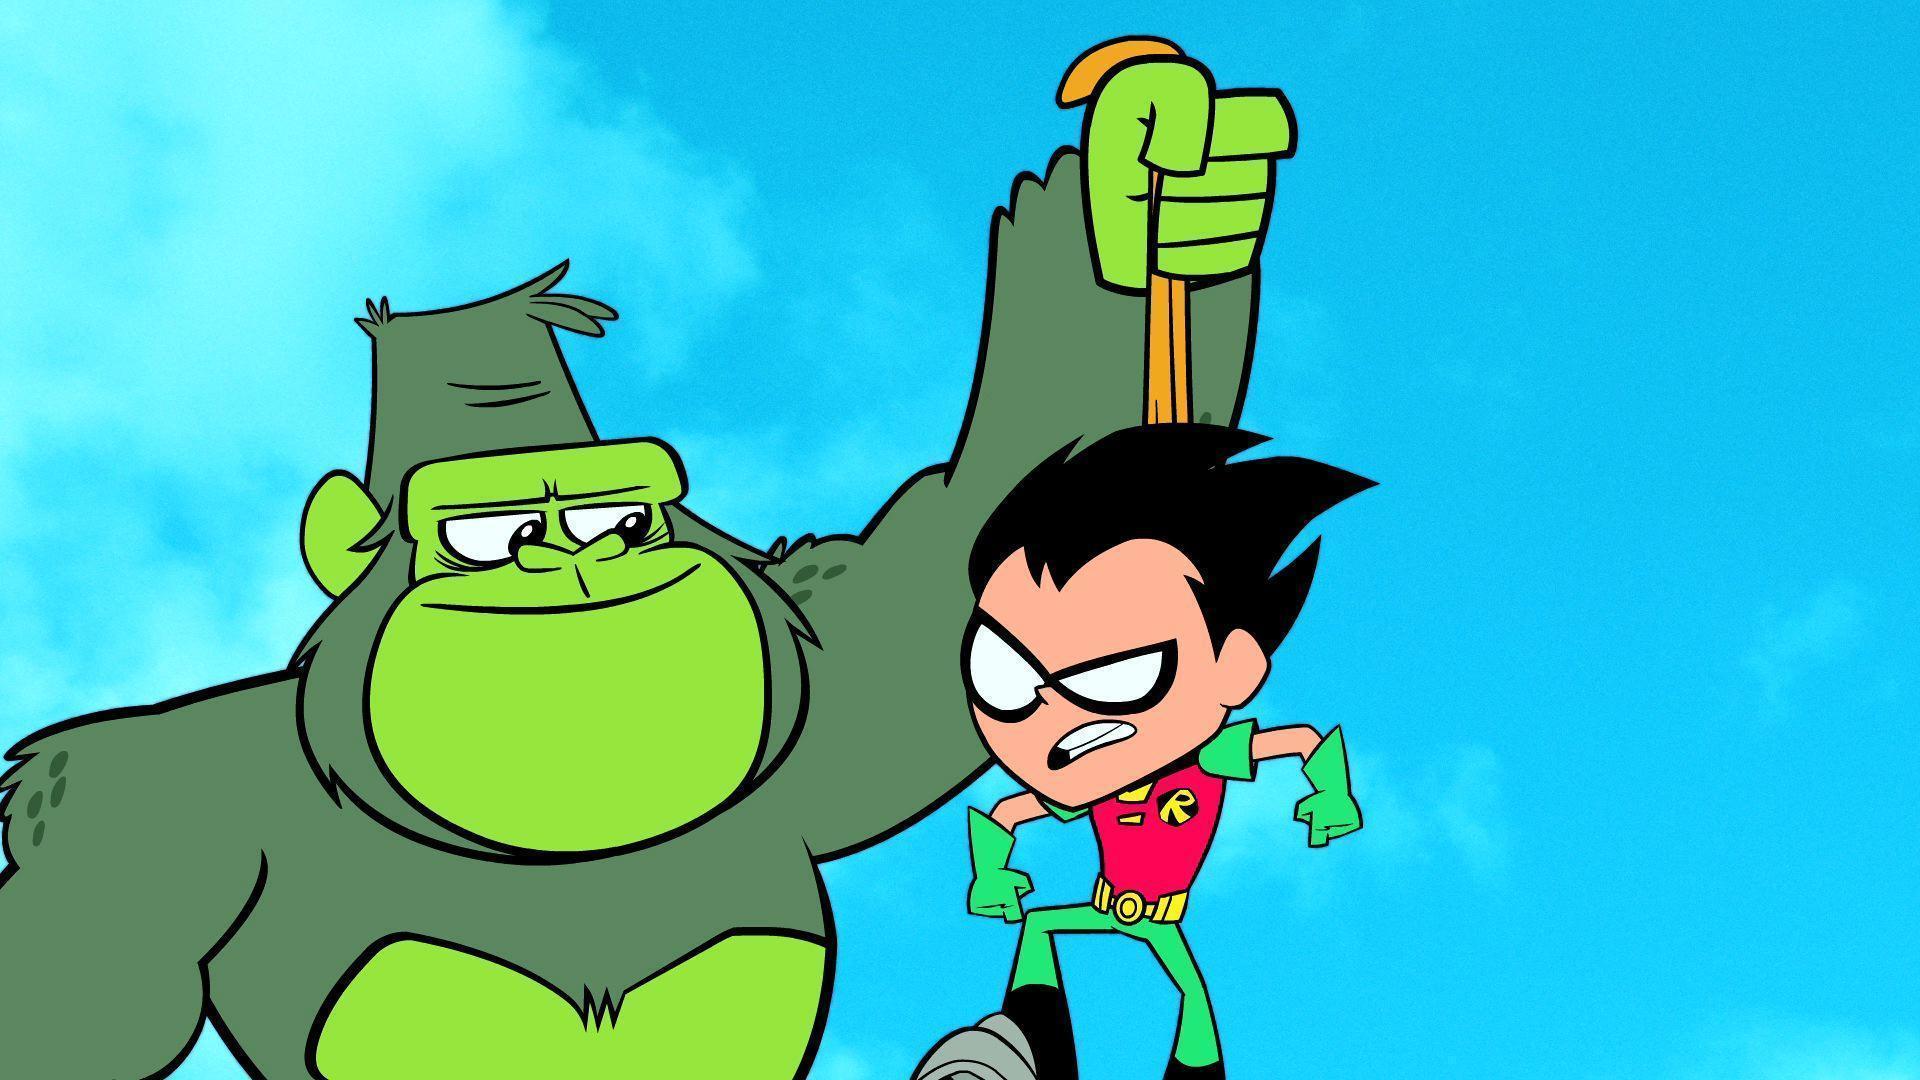 New Episode of Teen Titans Go! “Gorilla” Airs June 11 on Cartoon